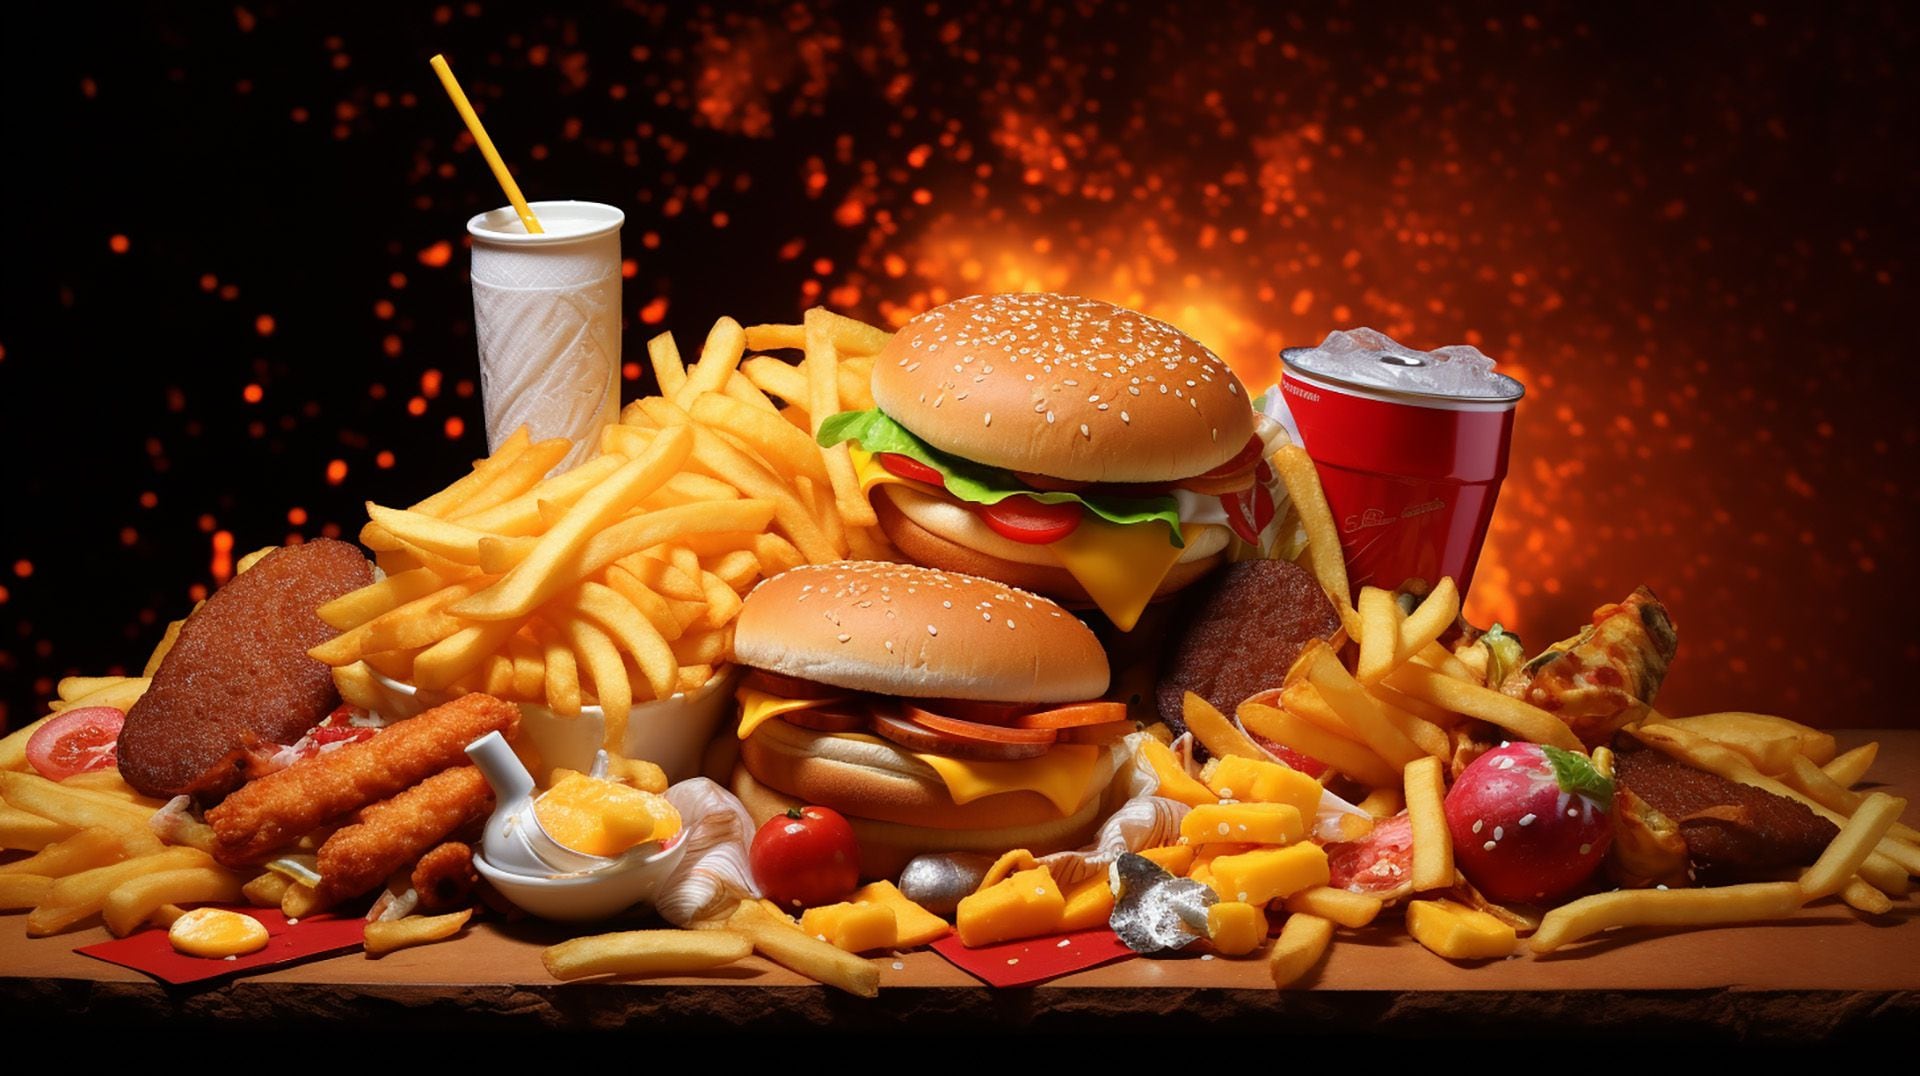 Fast Food, comida chatarra, Alimentos procesados, comida rapida - visualesIA